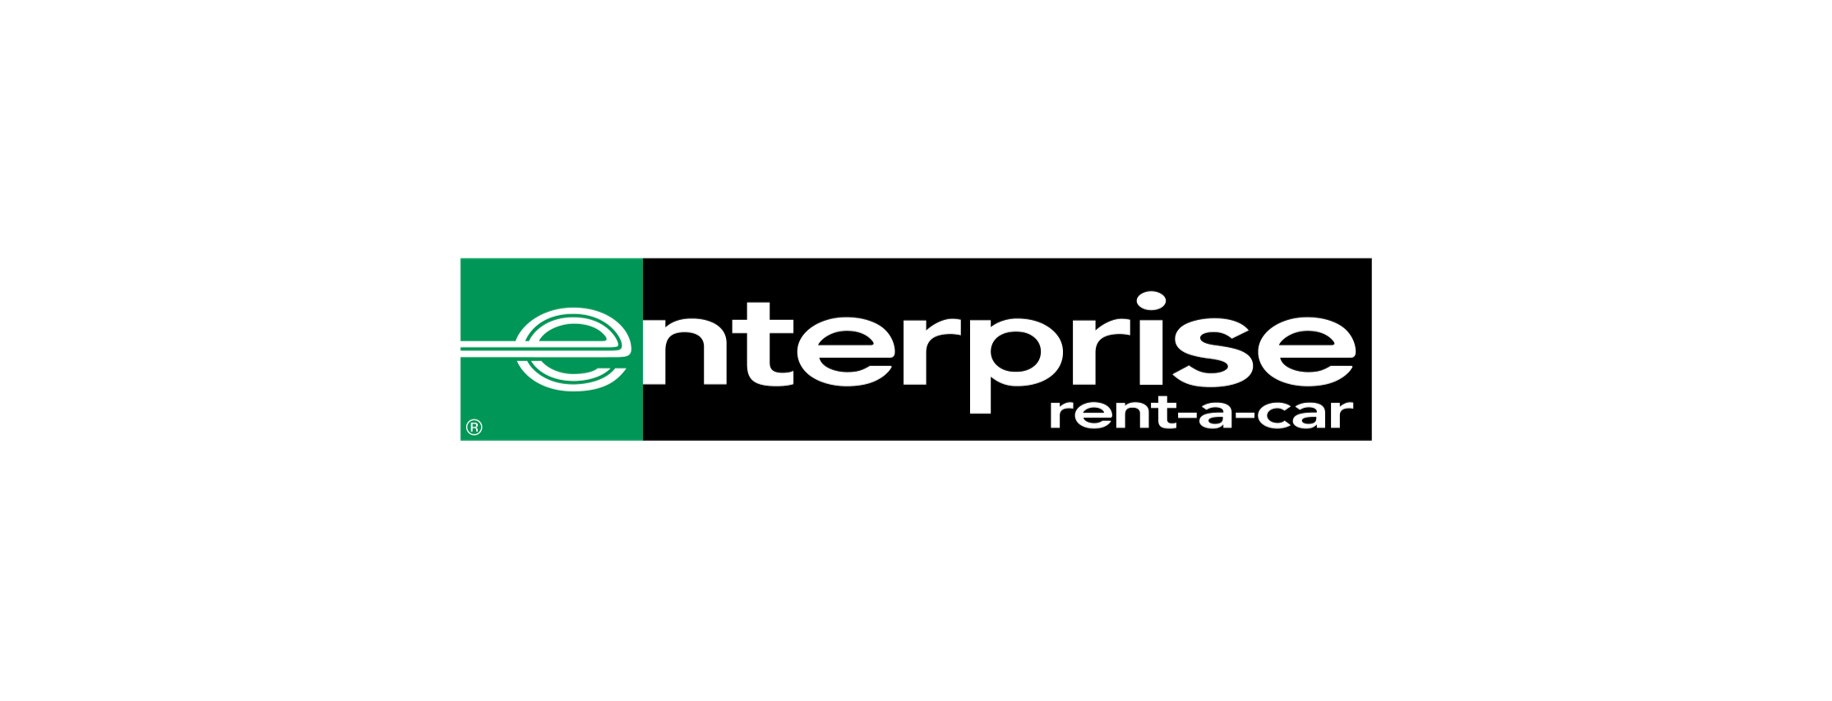 enterprise_helpcenter